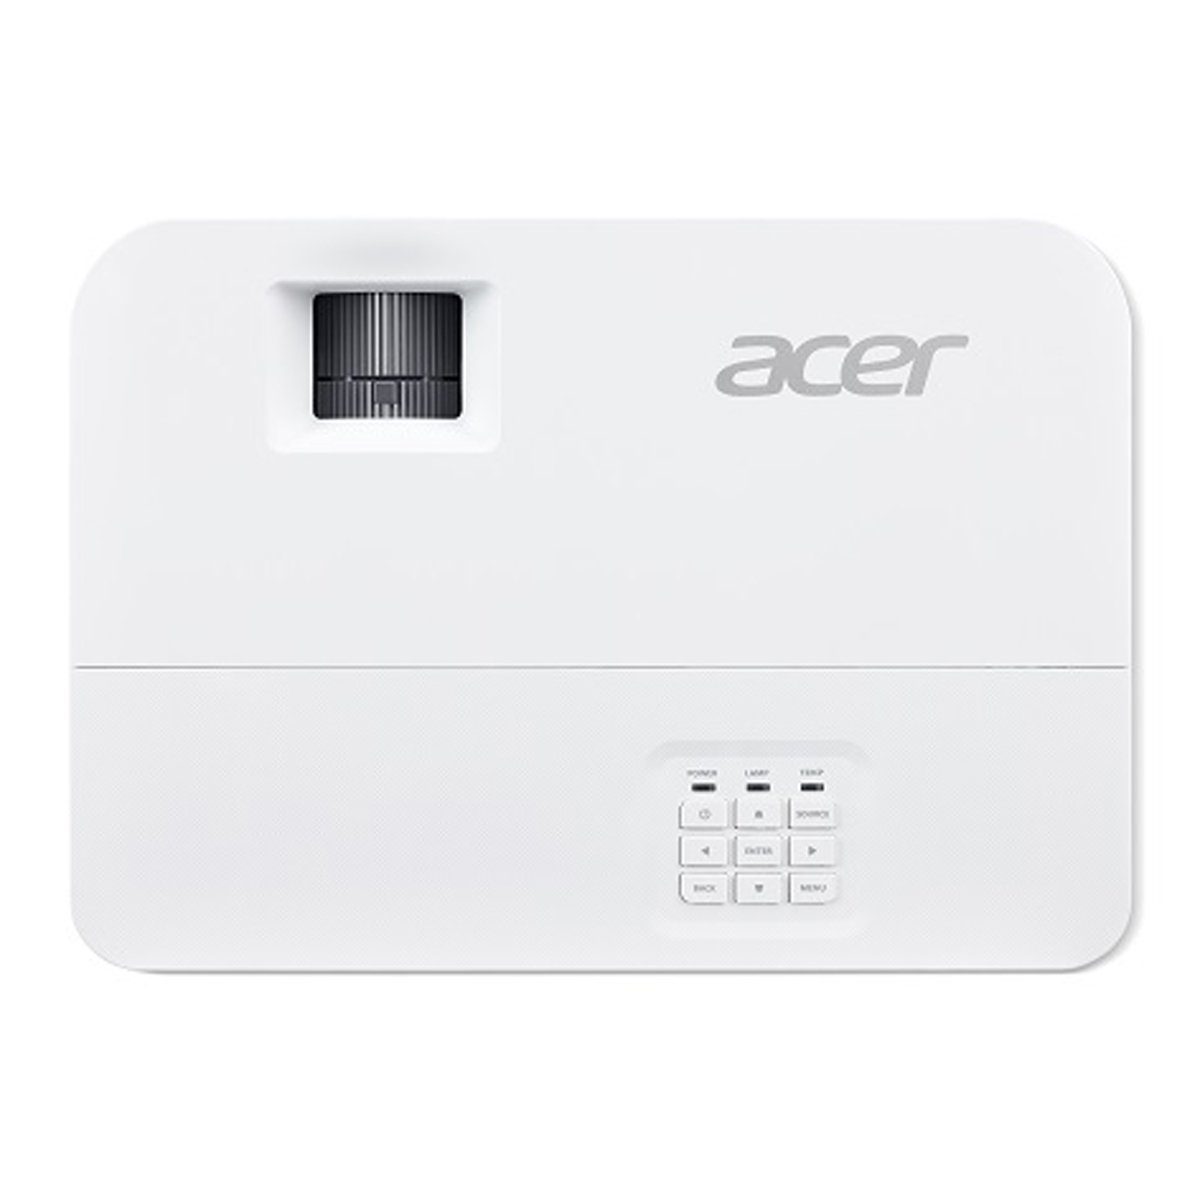 X1529HK 1080 px) 10000:1, Acer x (4800 lm, 1920 3D-Beamer